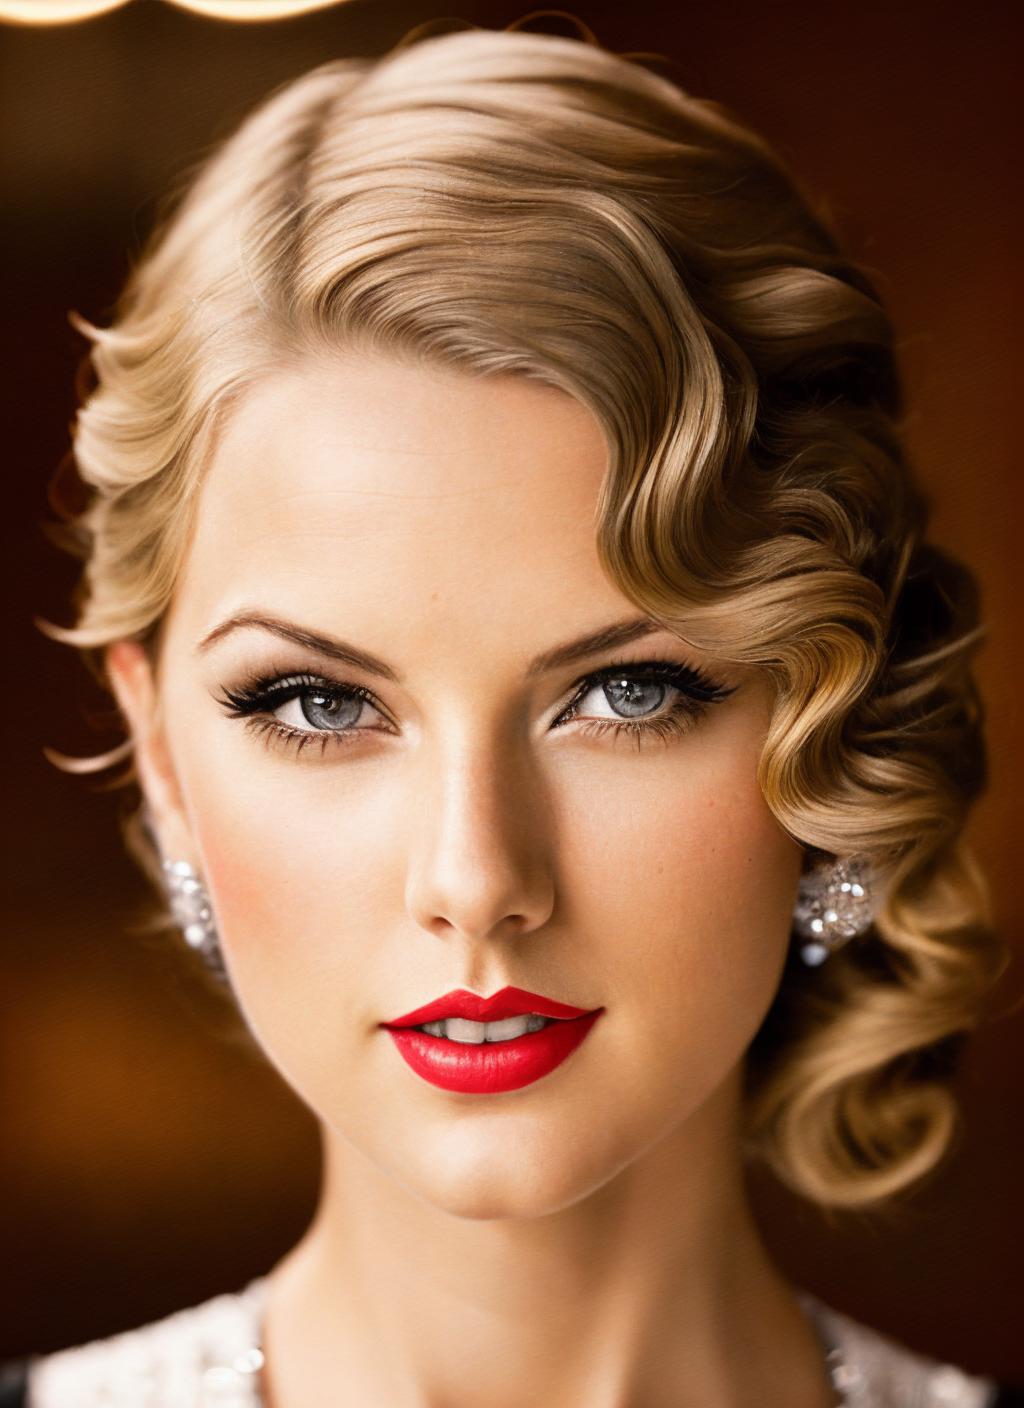 Taylor Swift image by malcolmrey